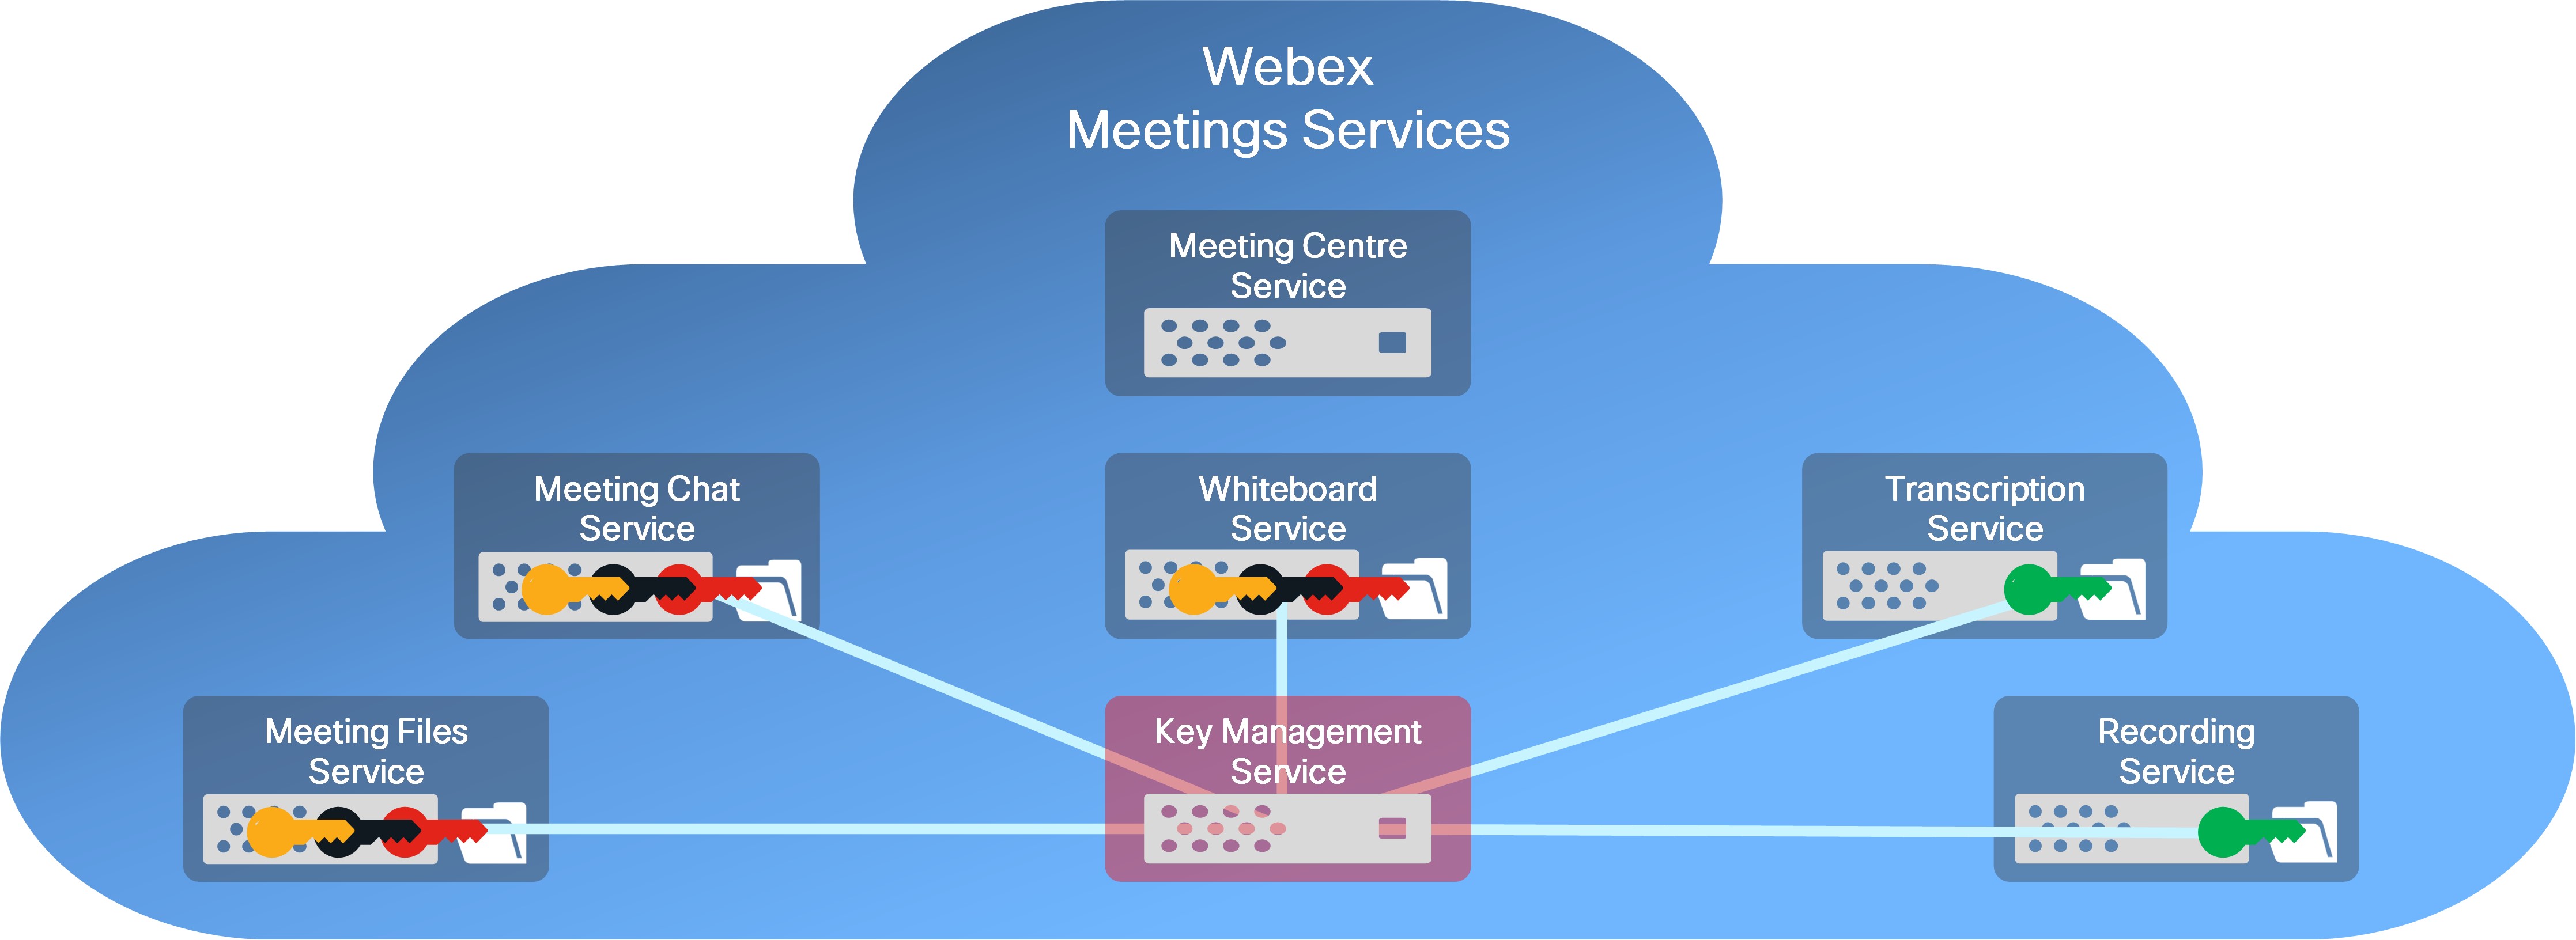 Webex meetings services diagram